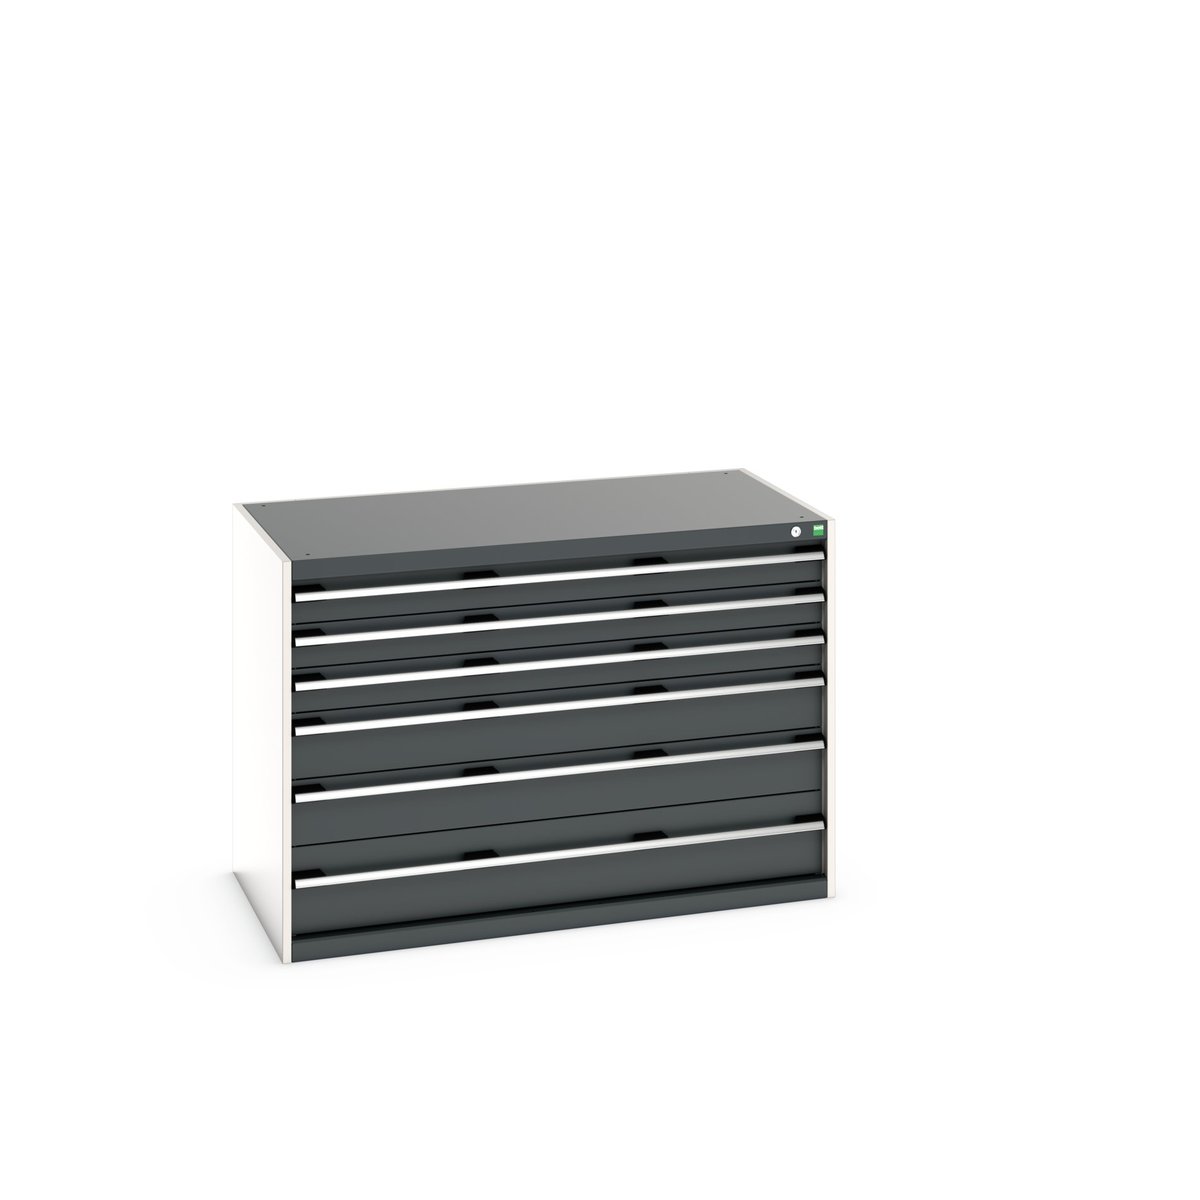 40030085. - cubio drawer cabinet